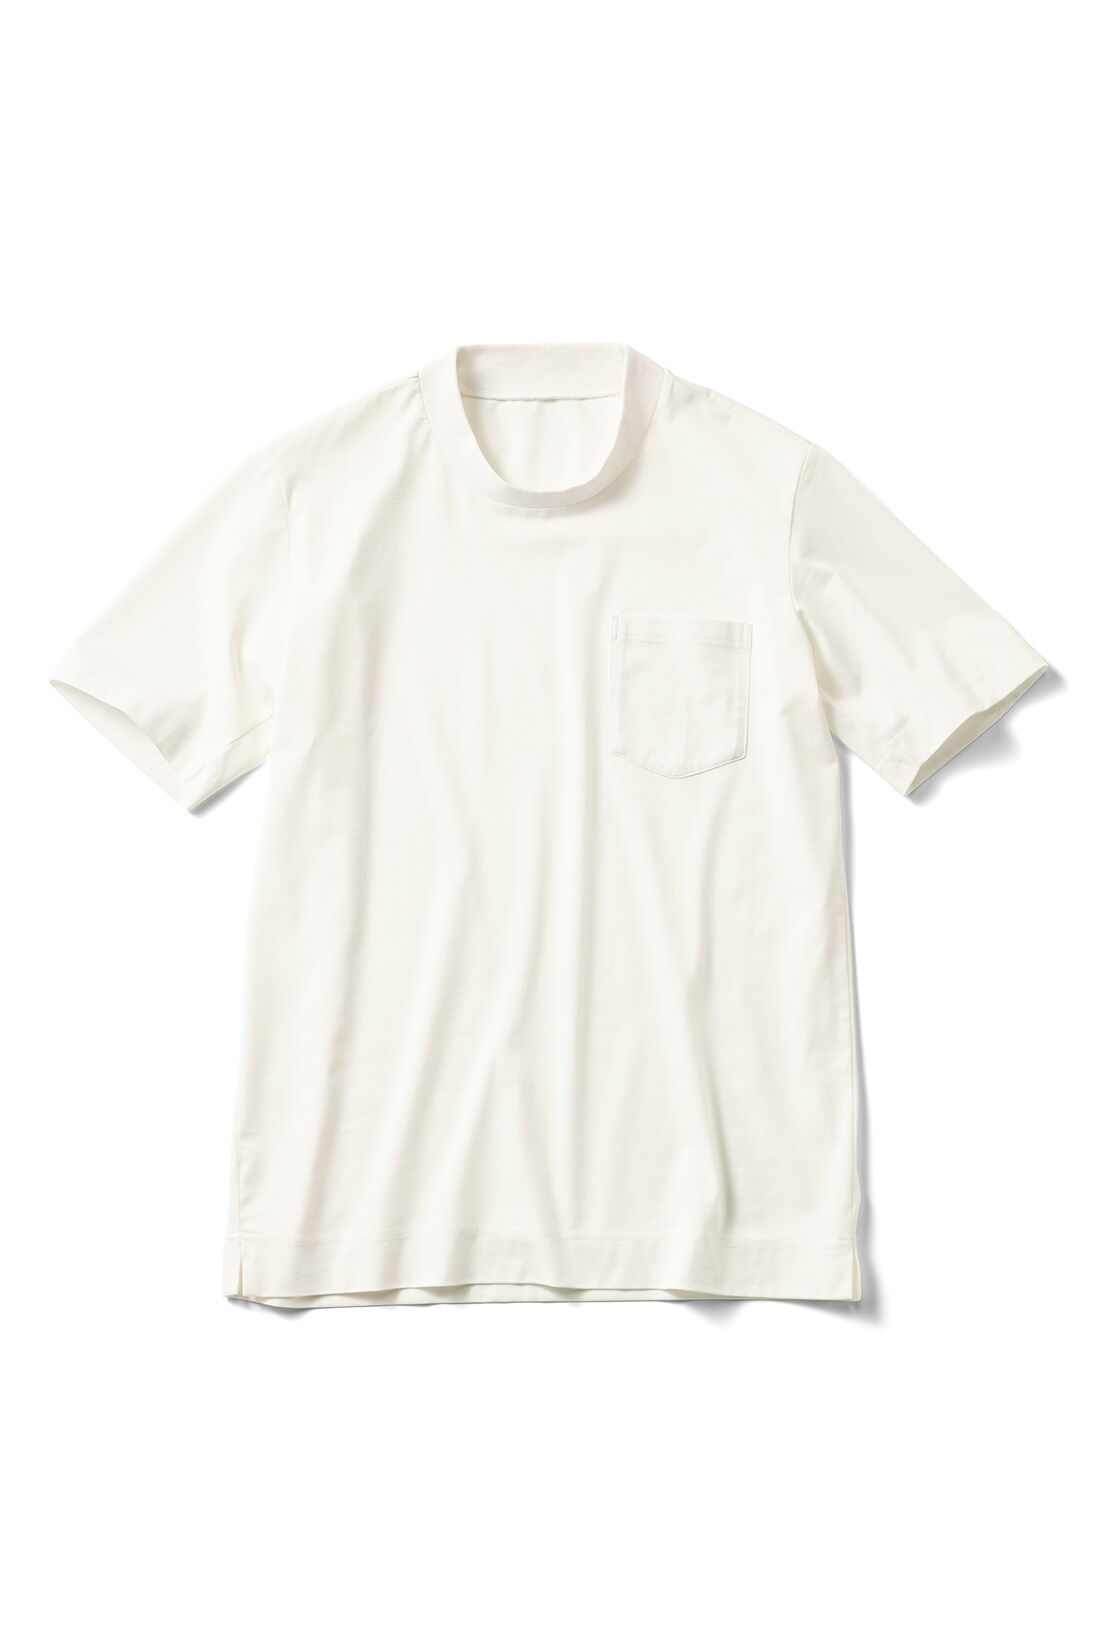 IEDIT|IEDIT[イディット] ジャケットインのためのシャツの代わりに着てほしい 美ノビ素材のメンズクルーネックプルオーバートップス〈オフホワイト〉